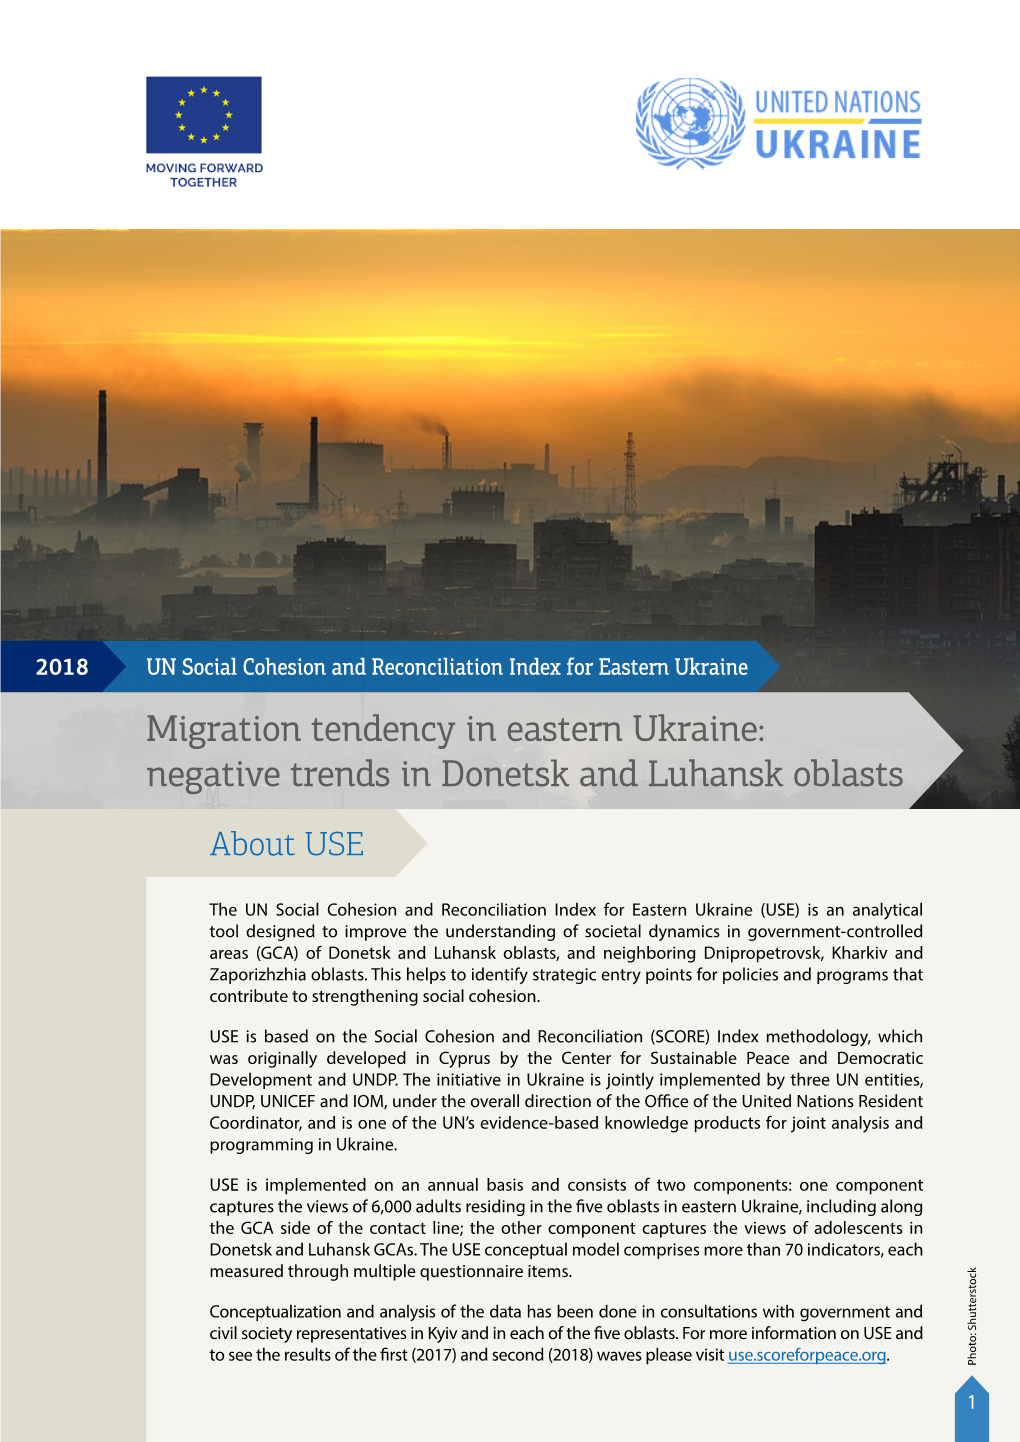 Negative Trends in Donetsk and Luhansk Oblasts Eastern Ukraine